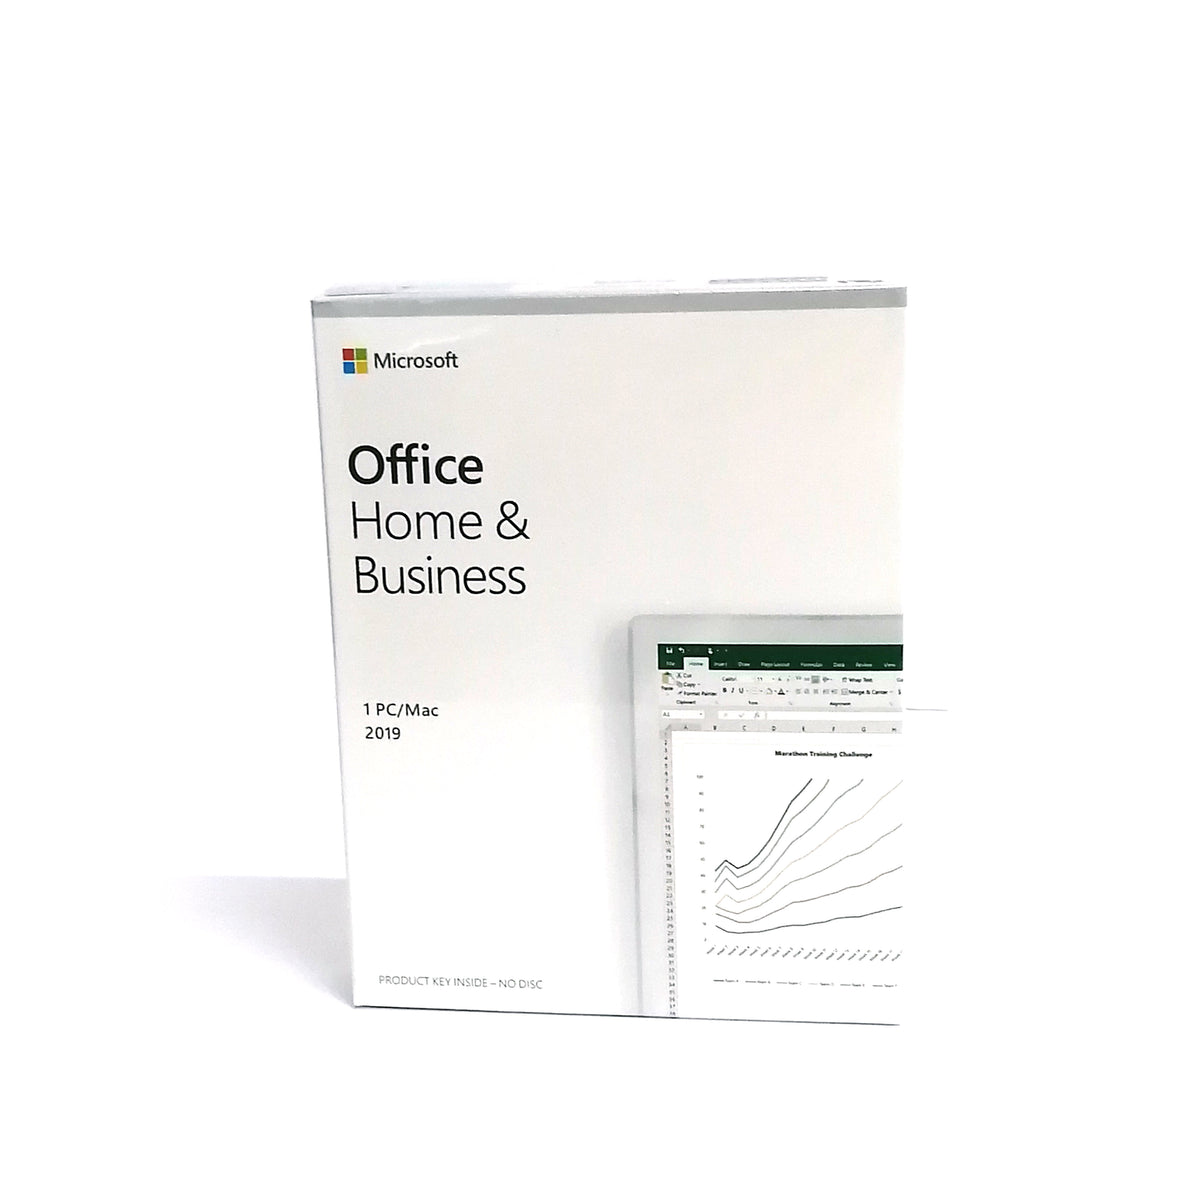 MS Office 2019 Home & Business – archercopier